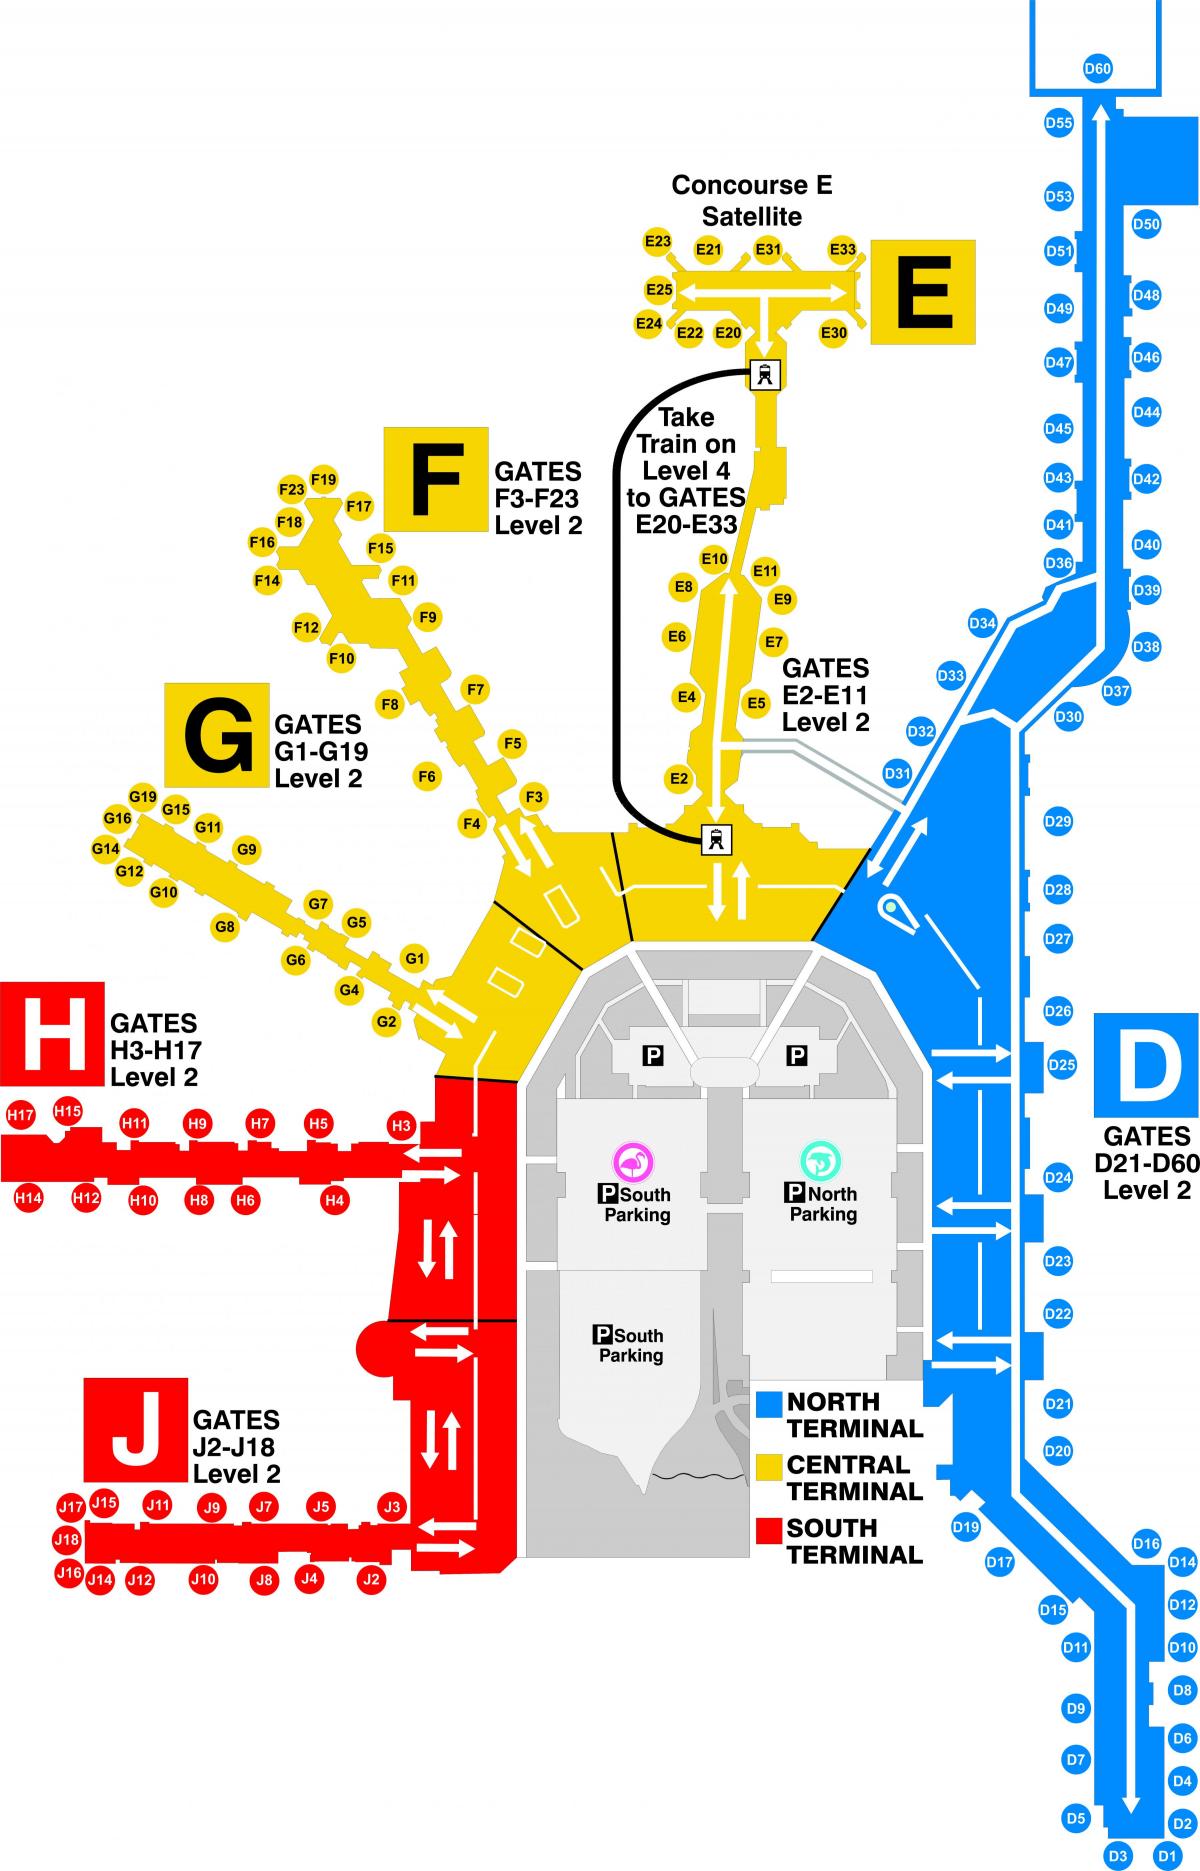 Miami air terminal mapie